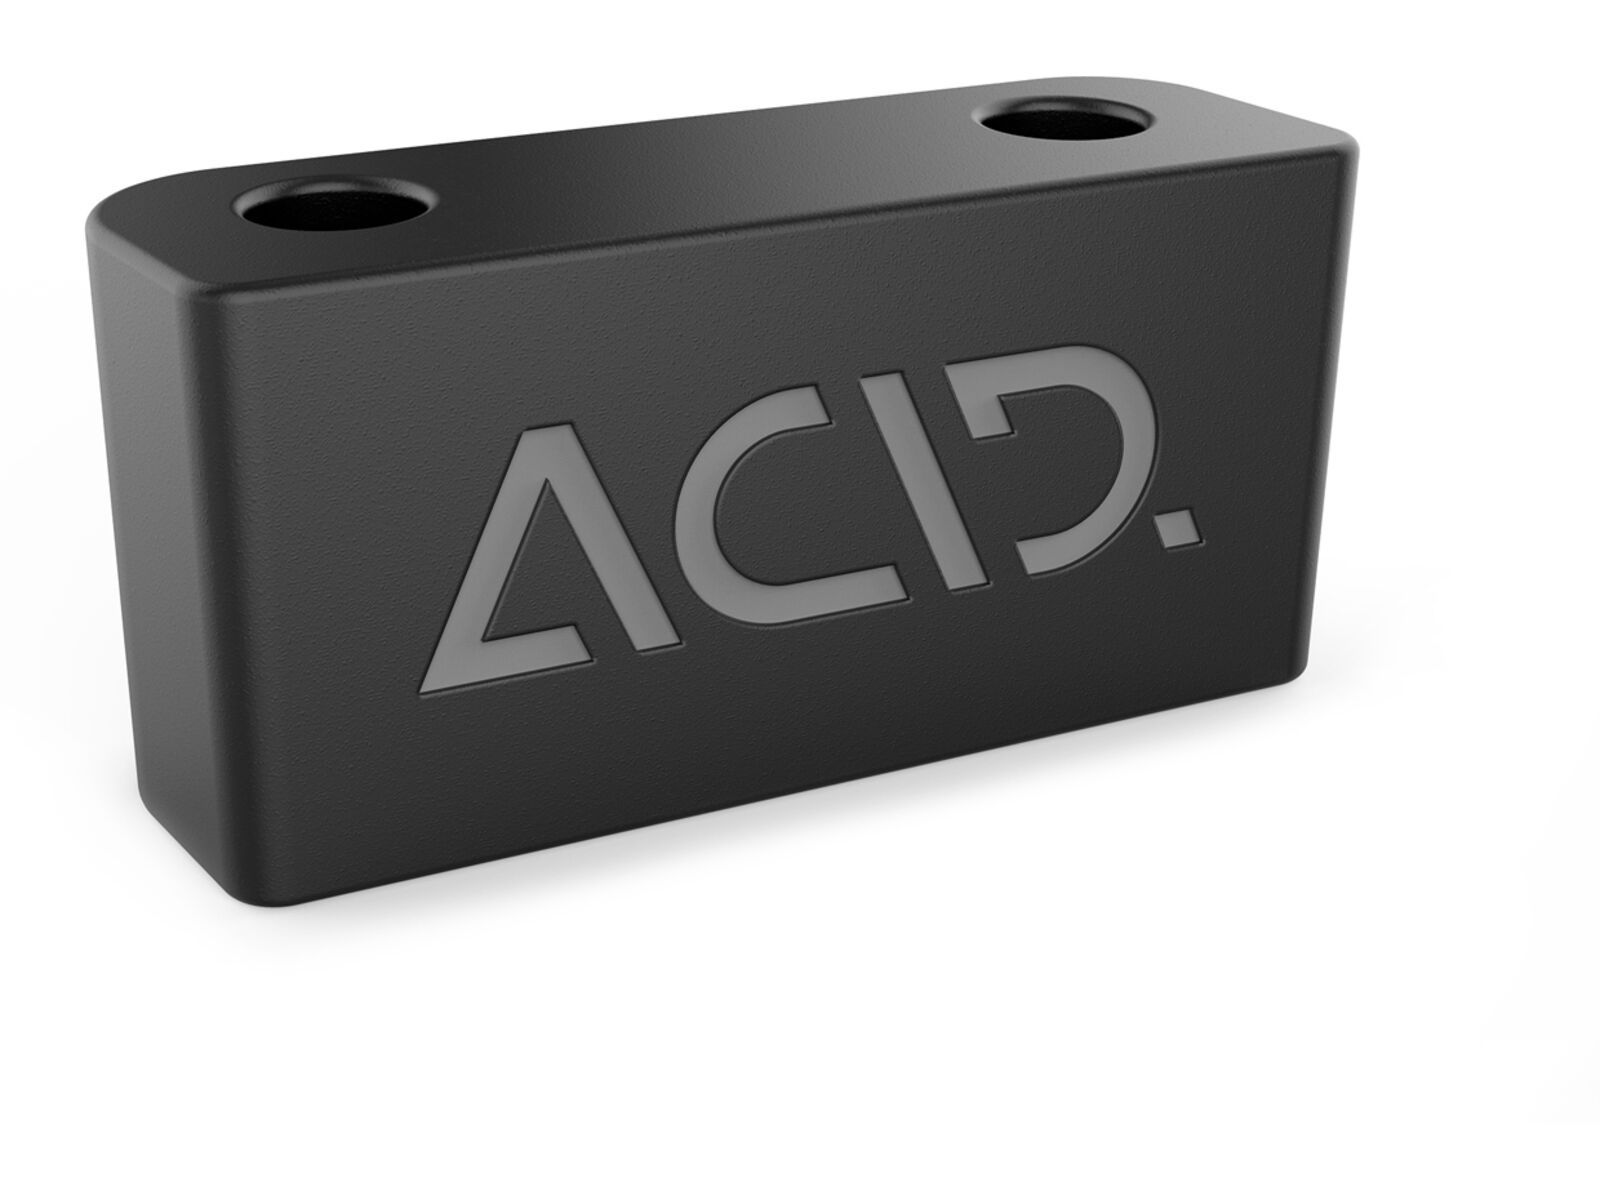 Cube Acid Abstandshalter für Fahrradständer FM, black | Bild 1